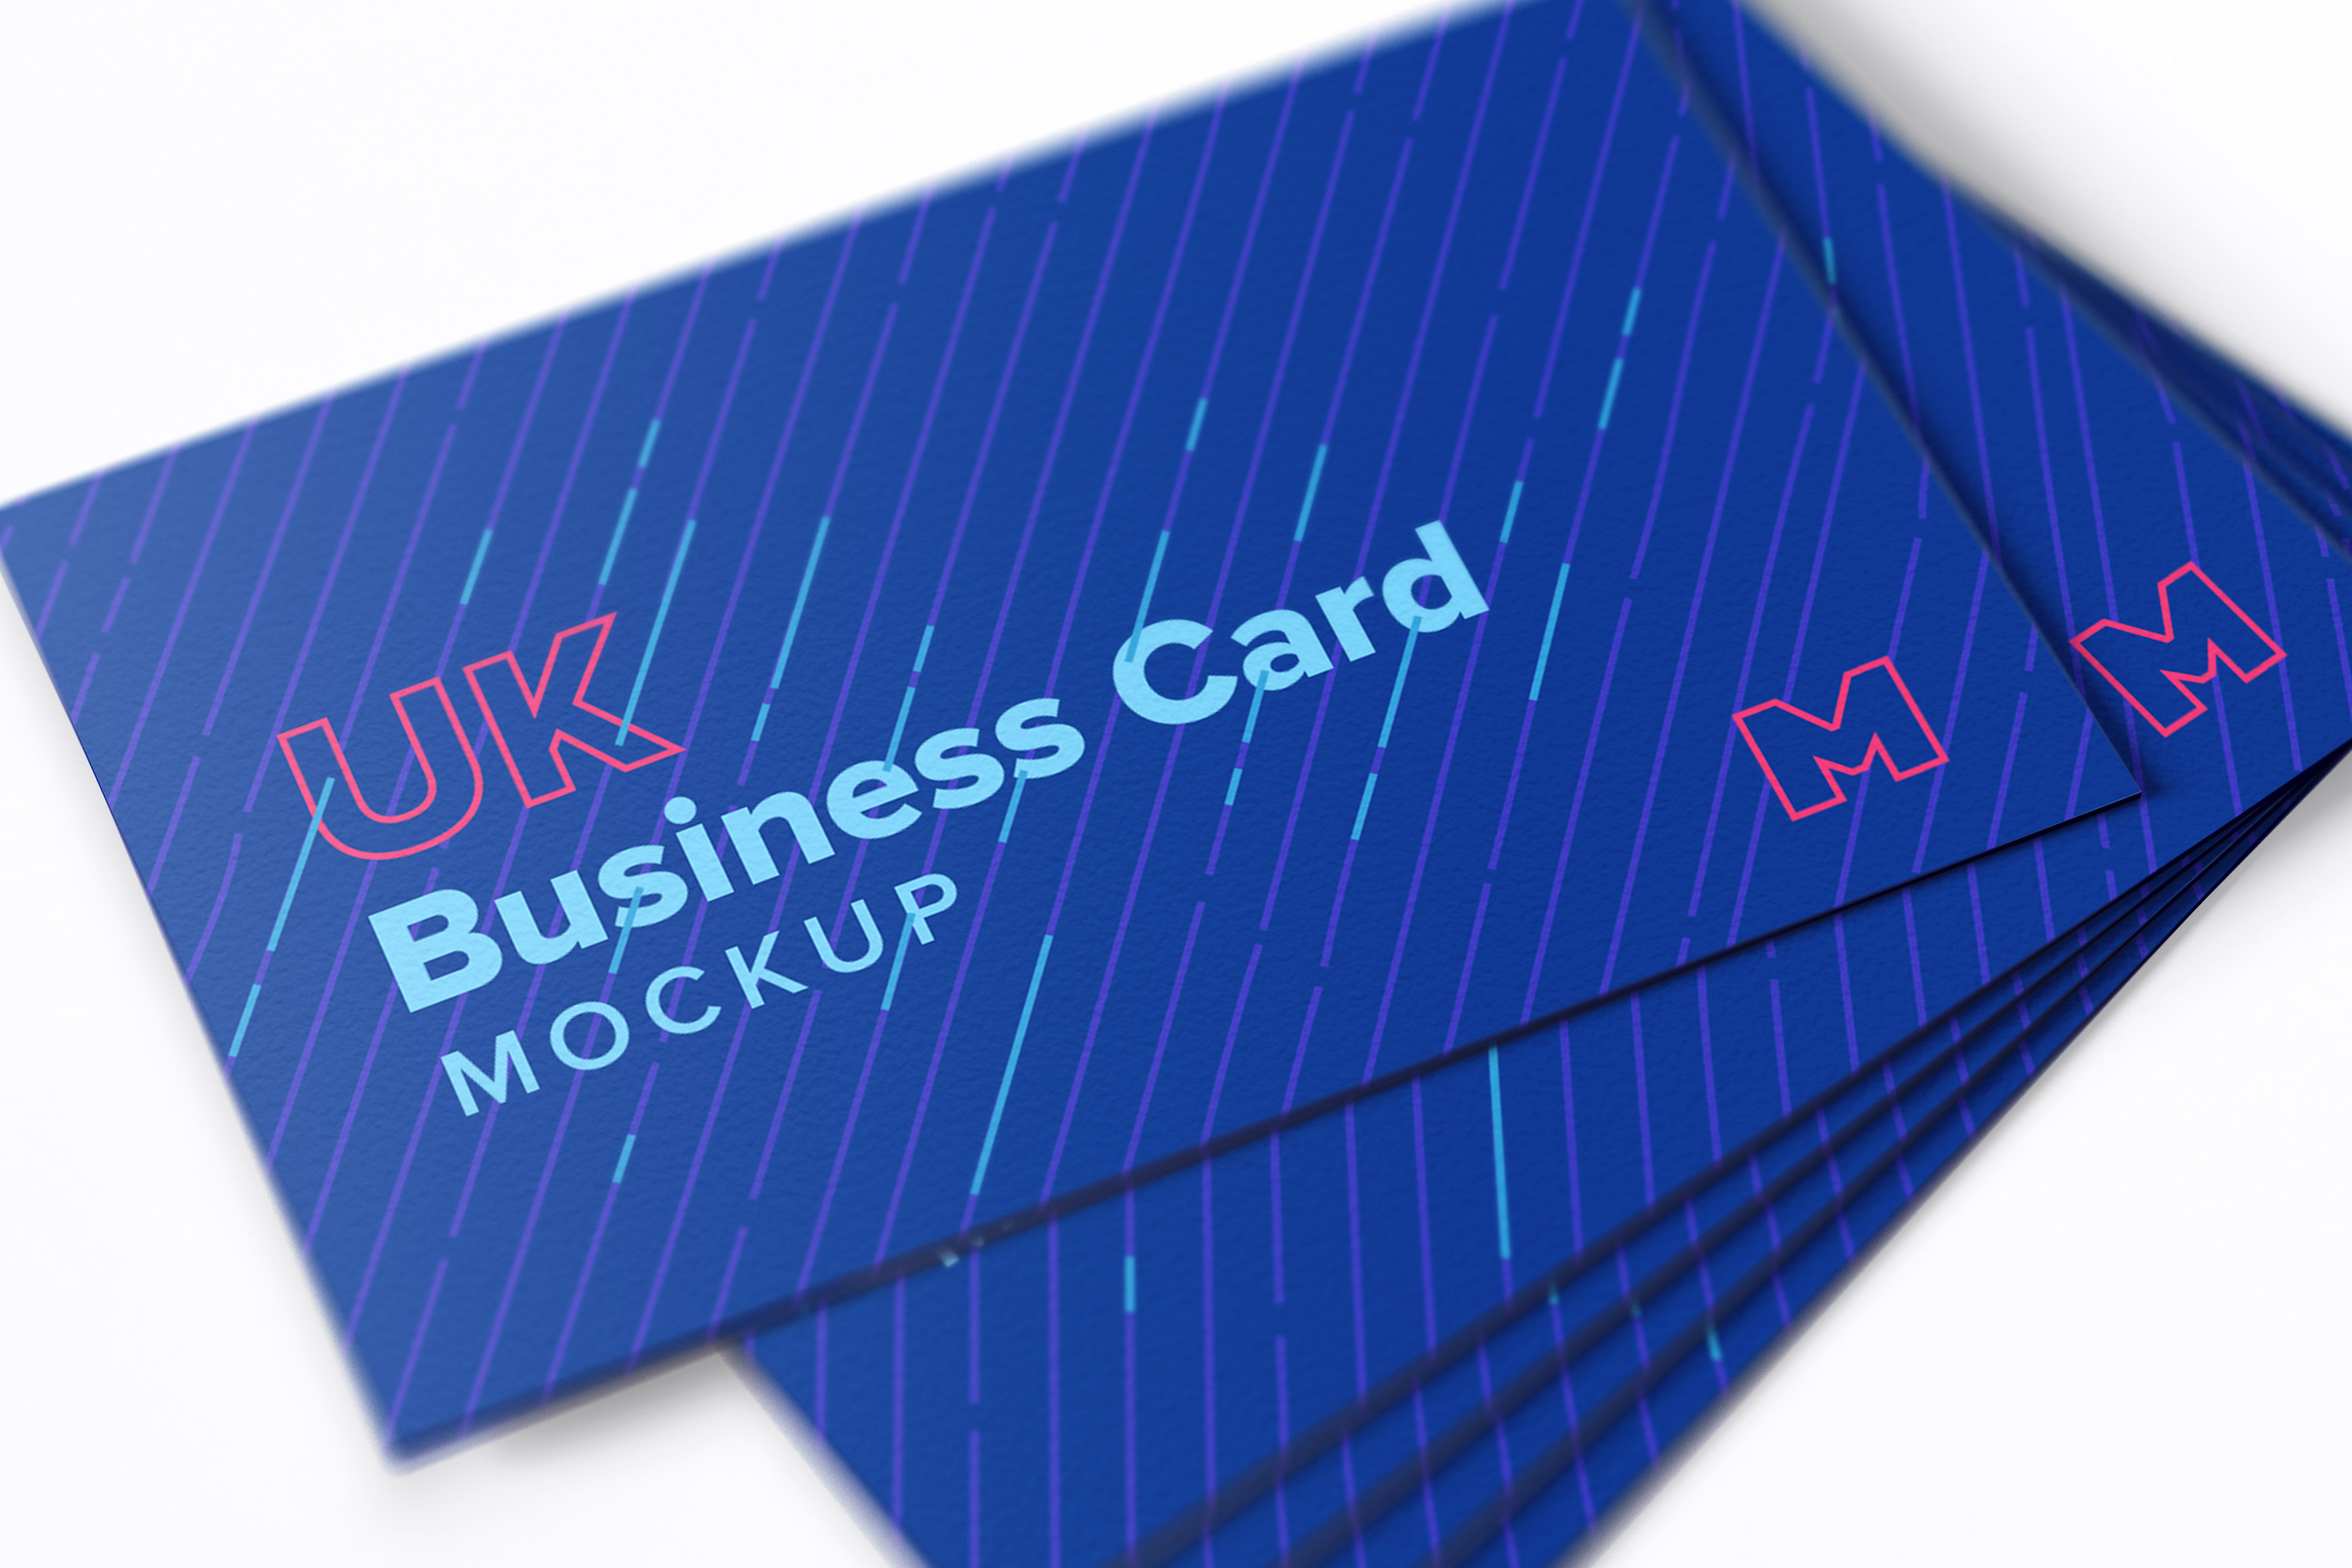 UK尺寸标准企业名片设计效果图预览样机模板04 UK Business Cards Mockup 04插图